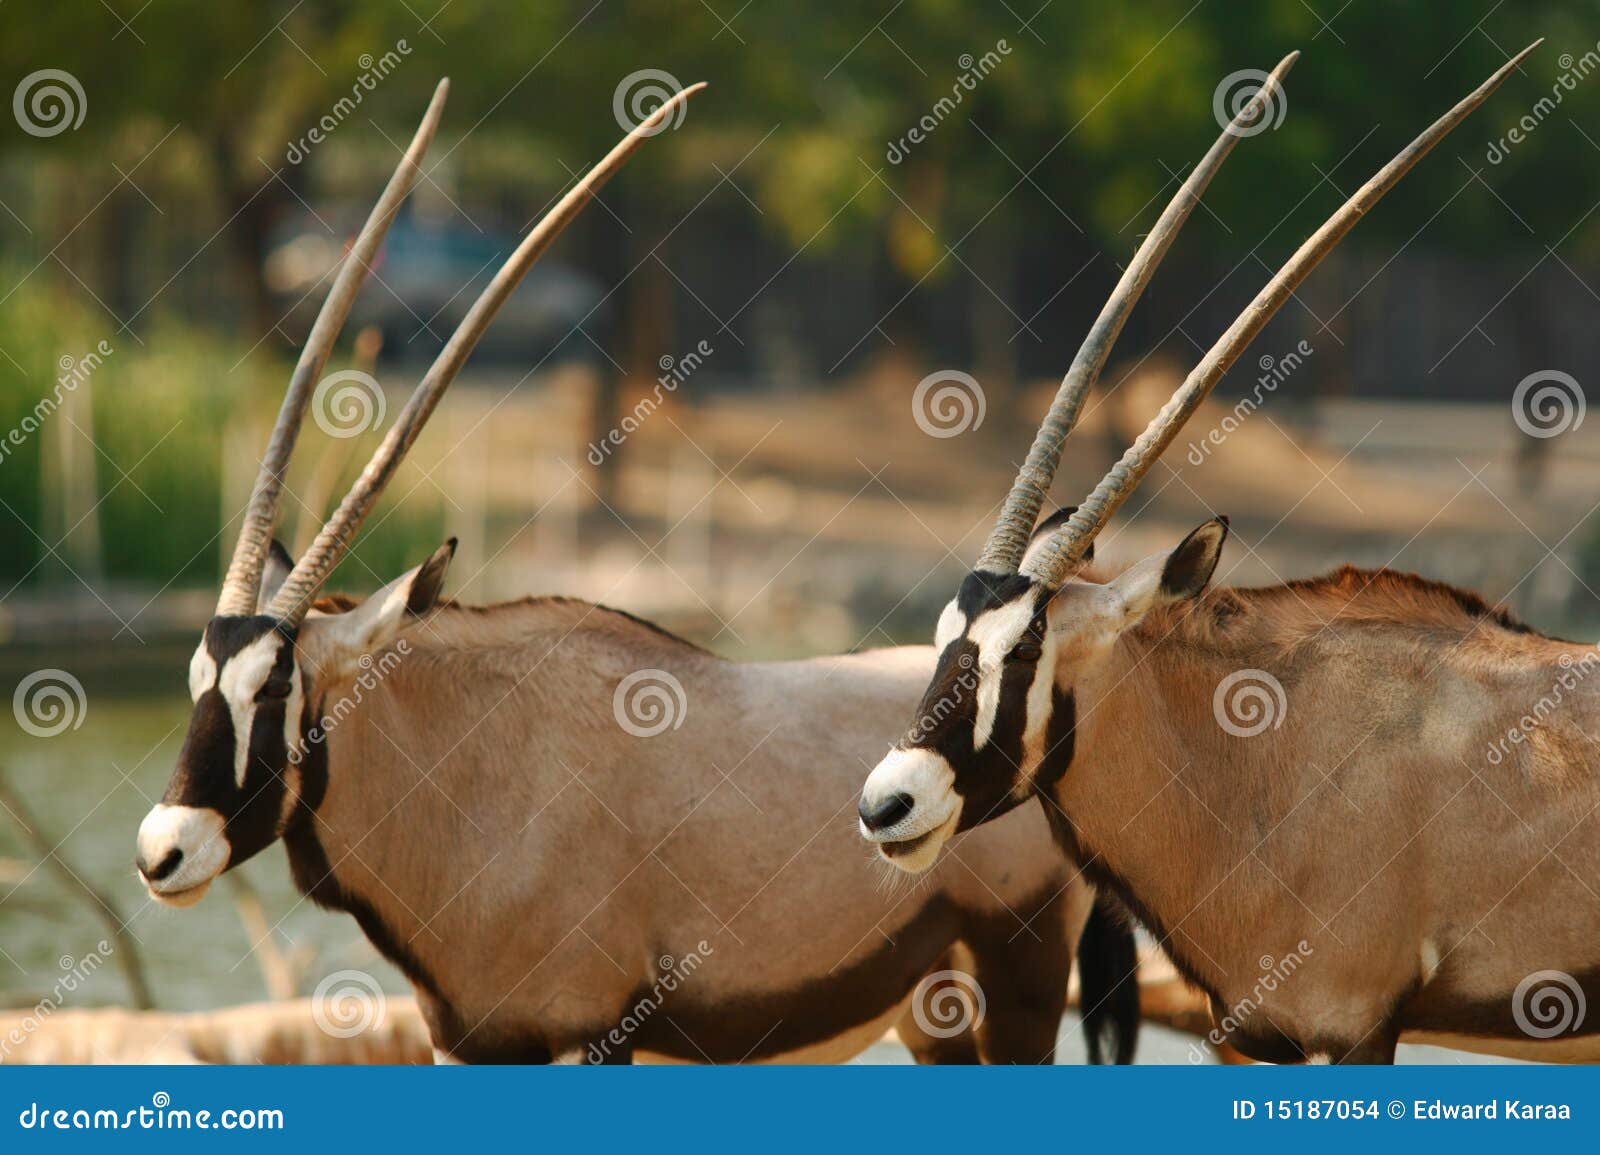 african oryx